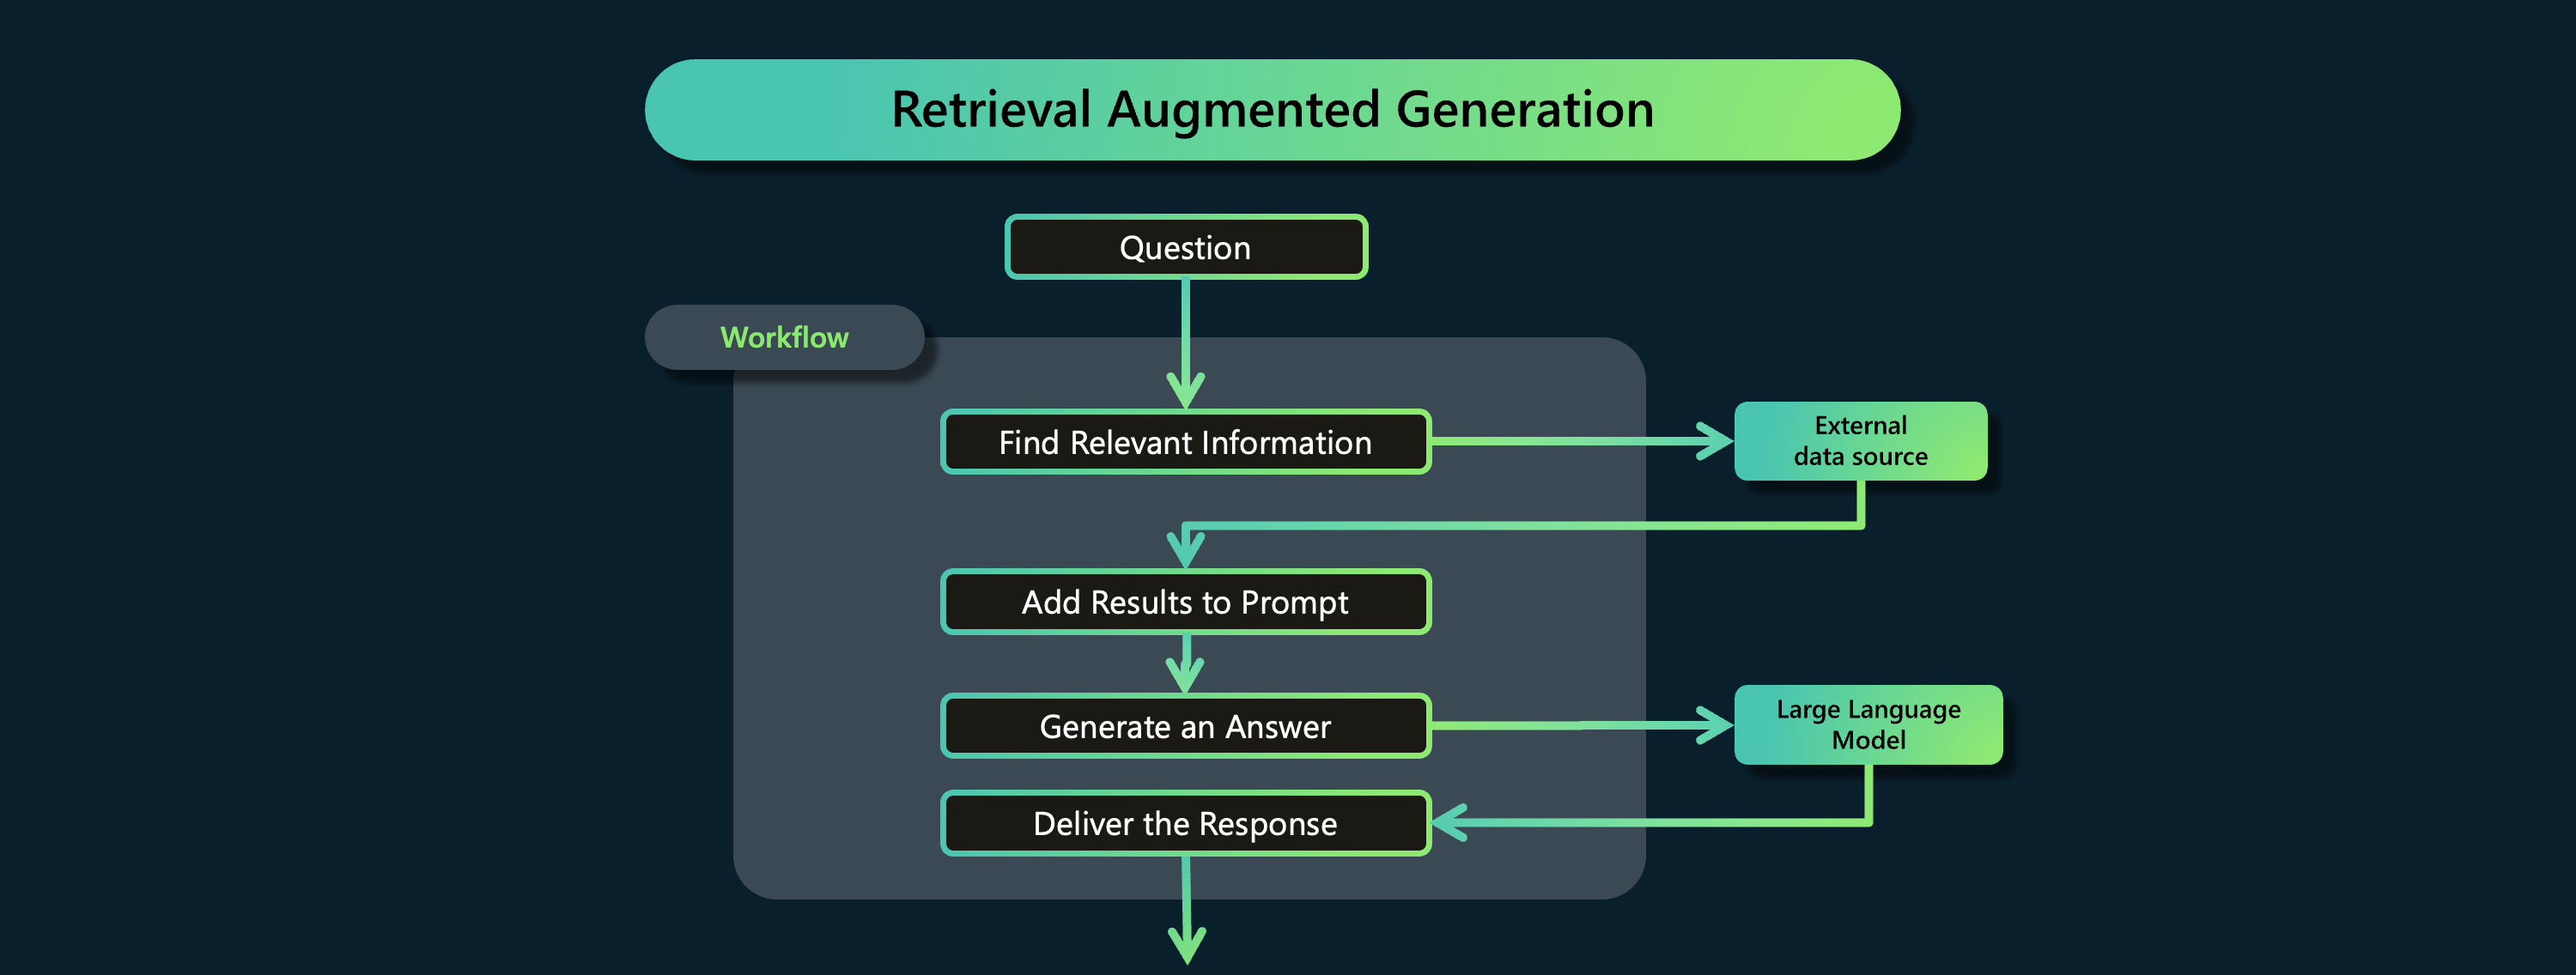 Retrieval-Augmented Generation